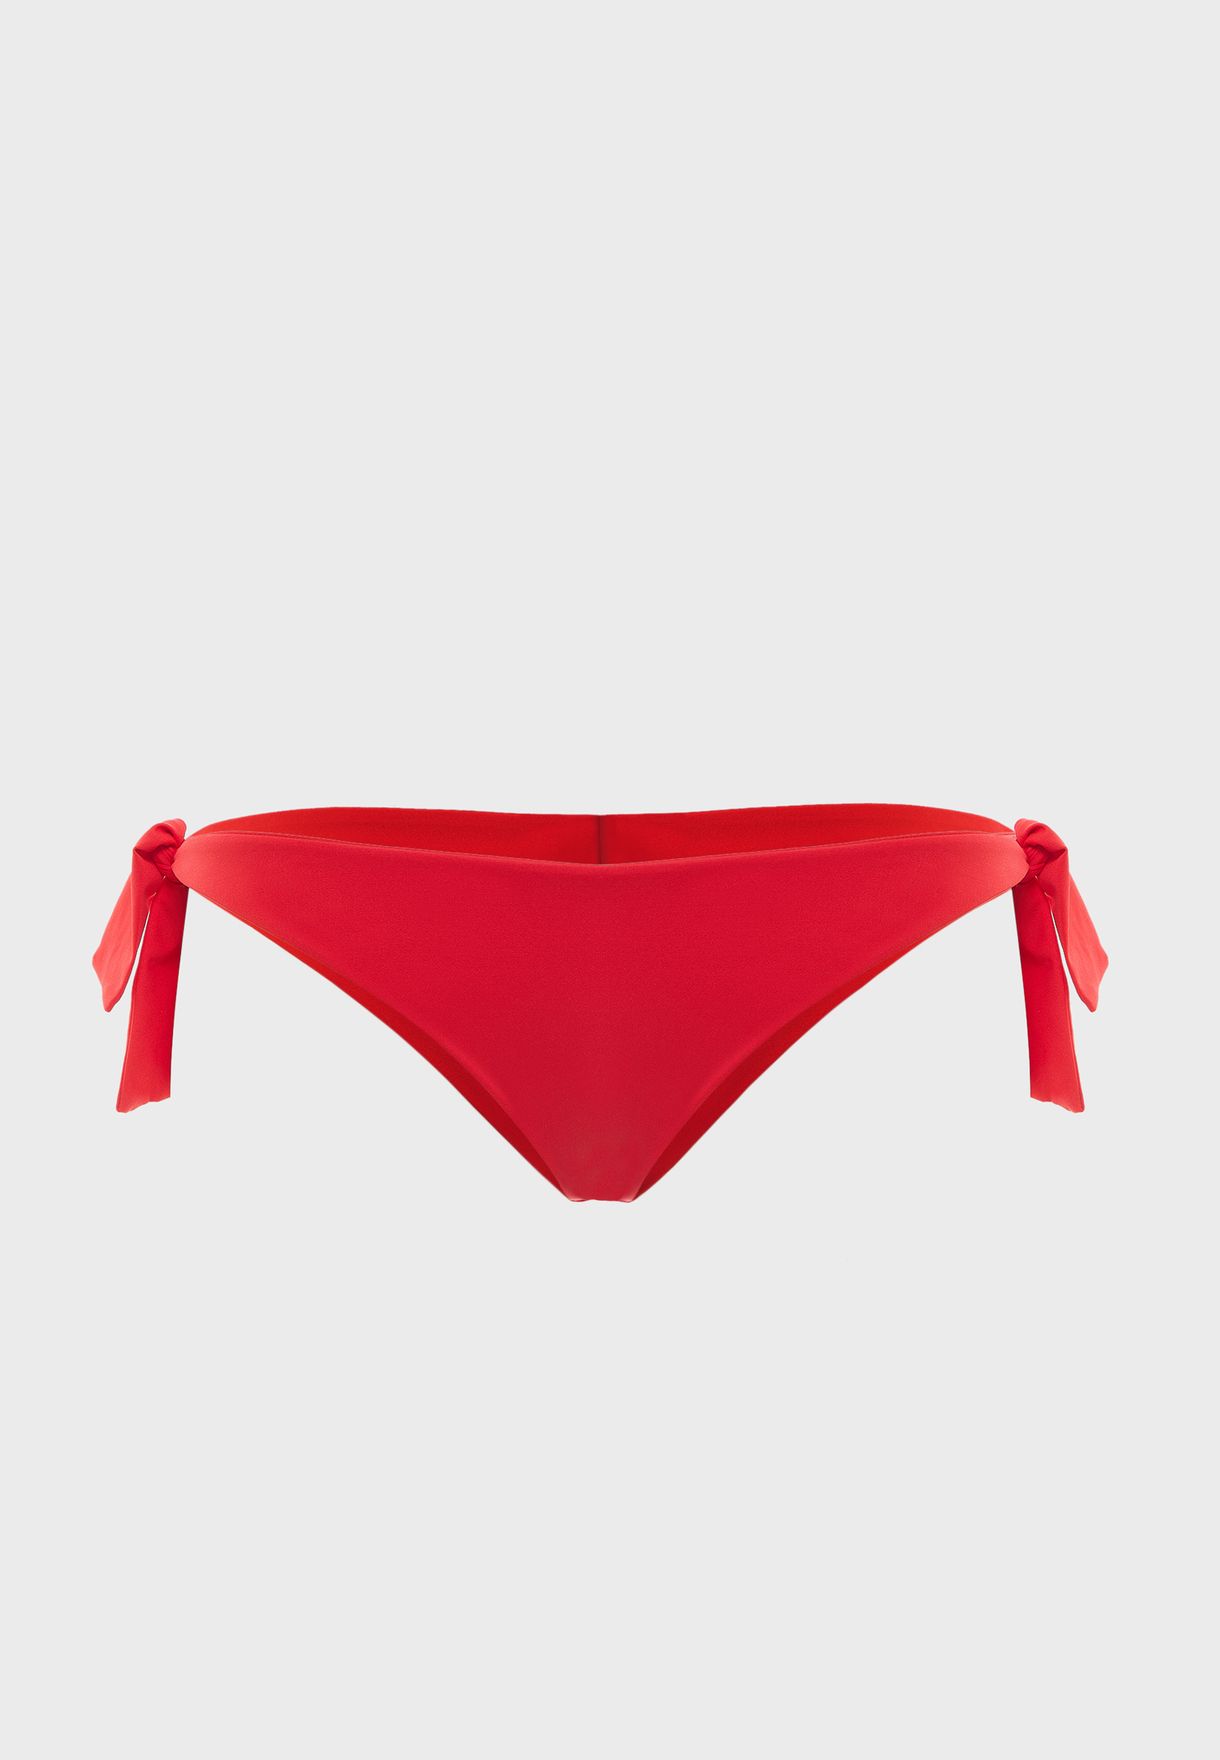 red brazilian bikini bottoms